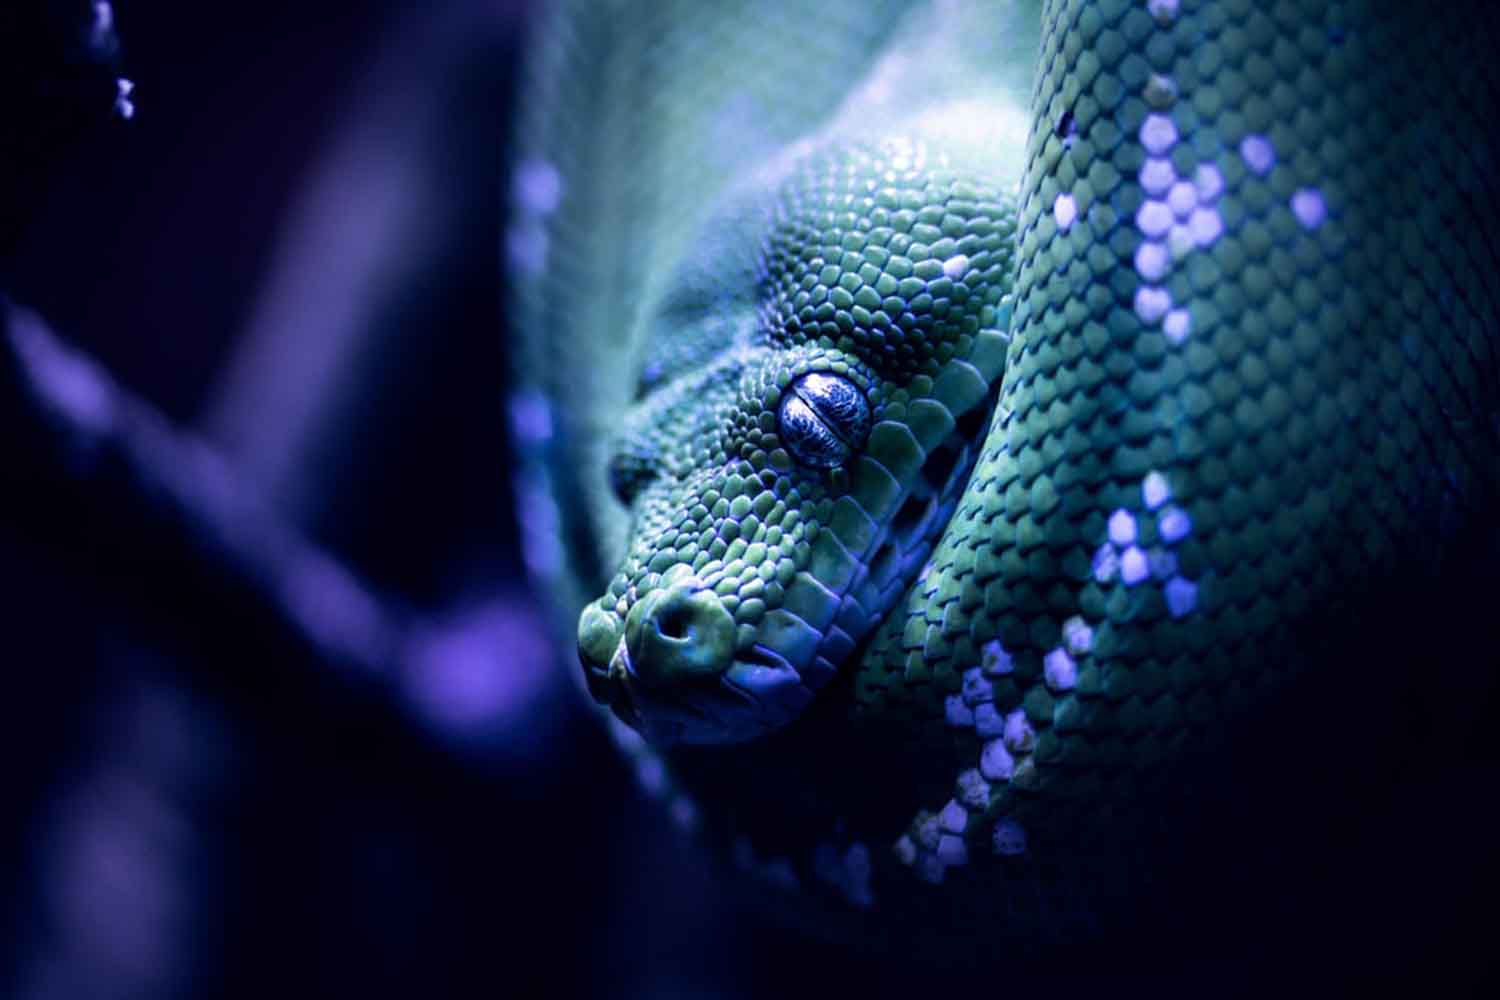 Trippy coloured snake